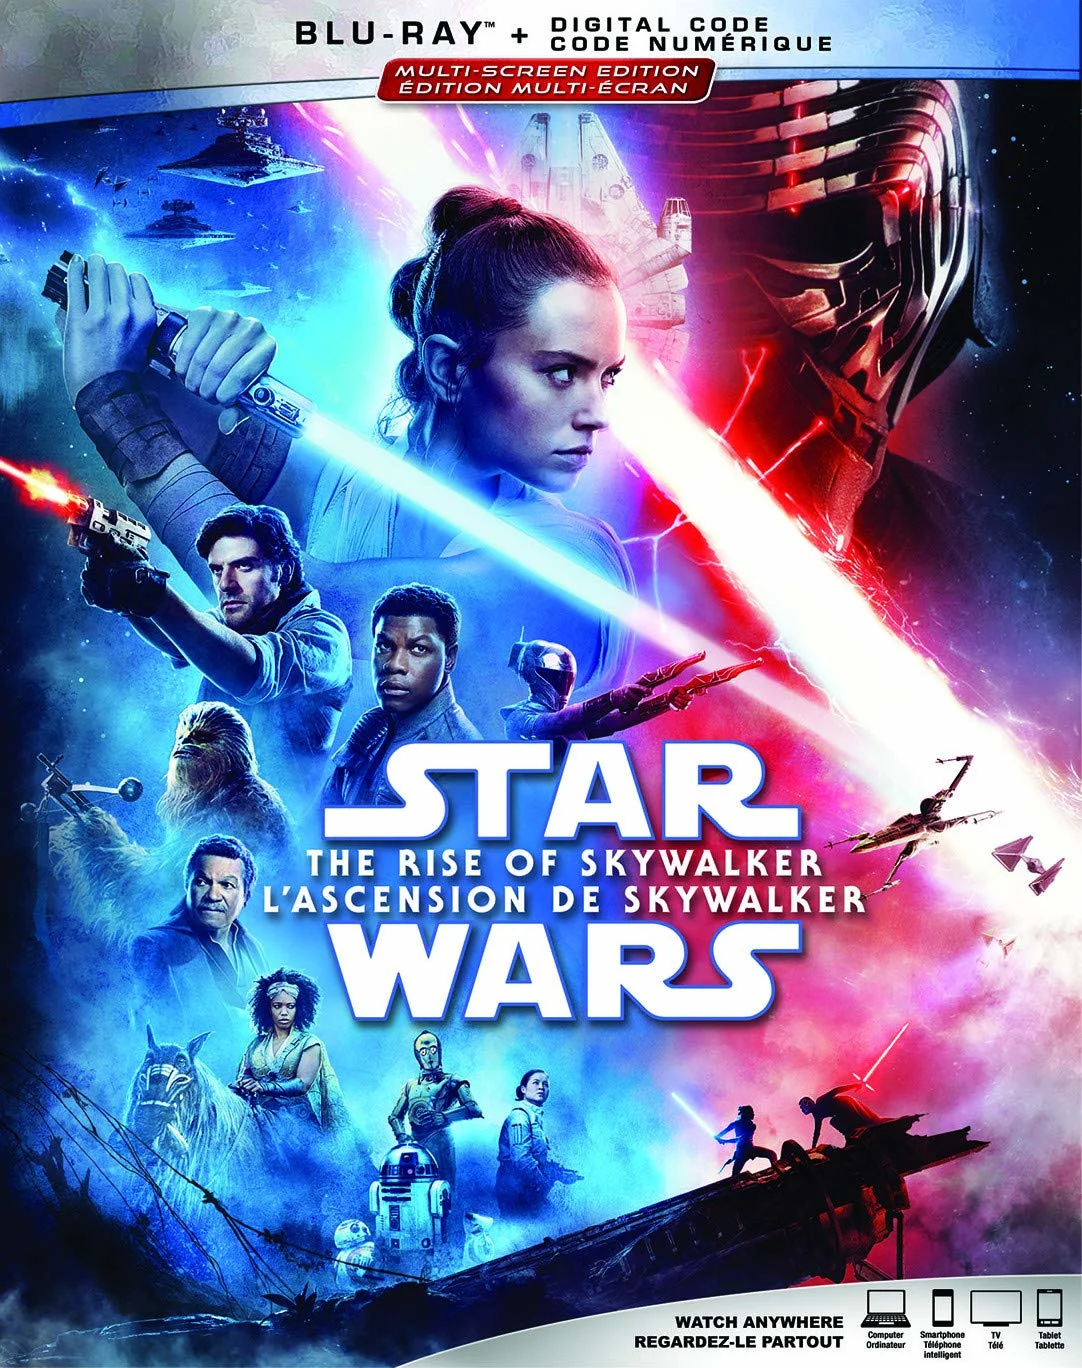 Star Wars: The Rise of Skywalker (Blu-ray) on MovieShack